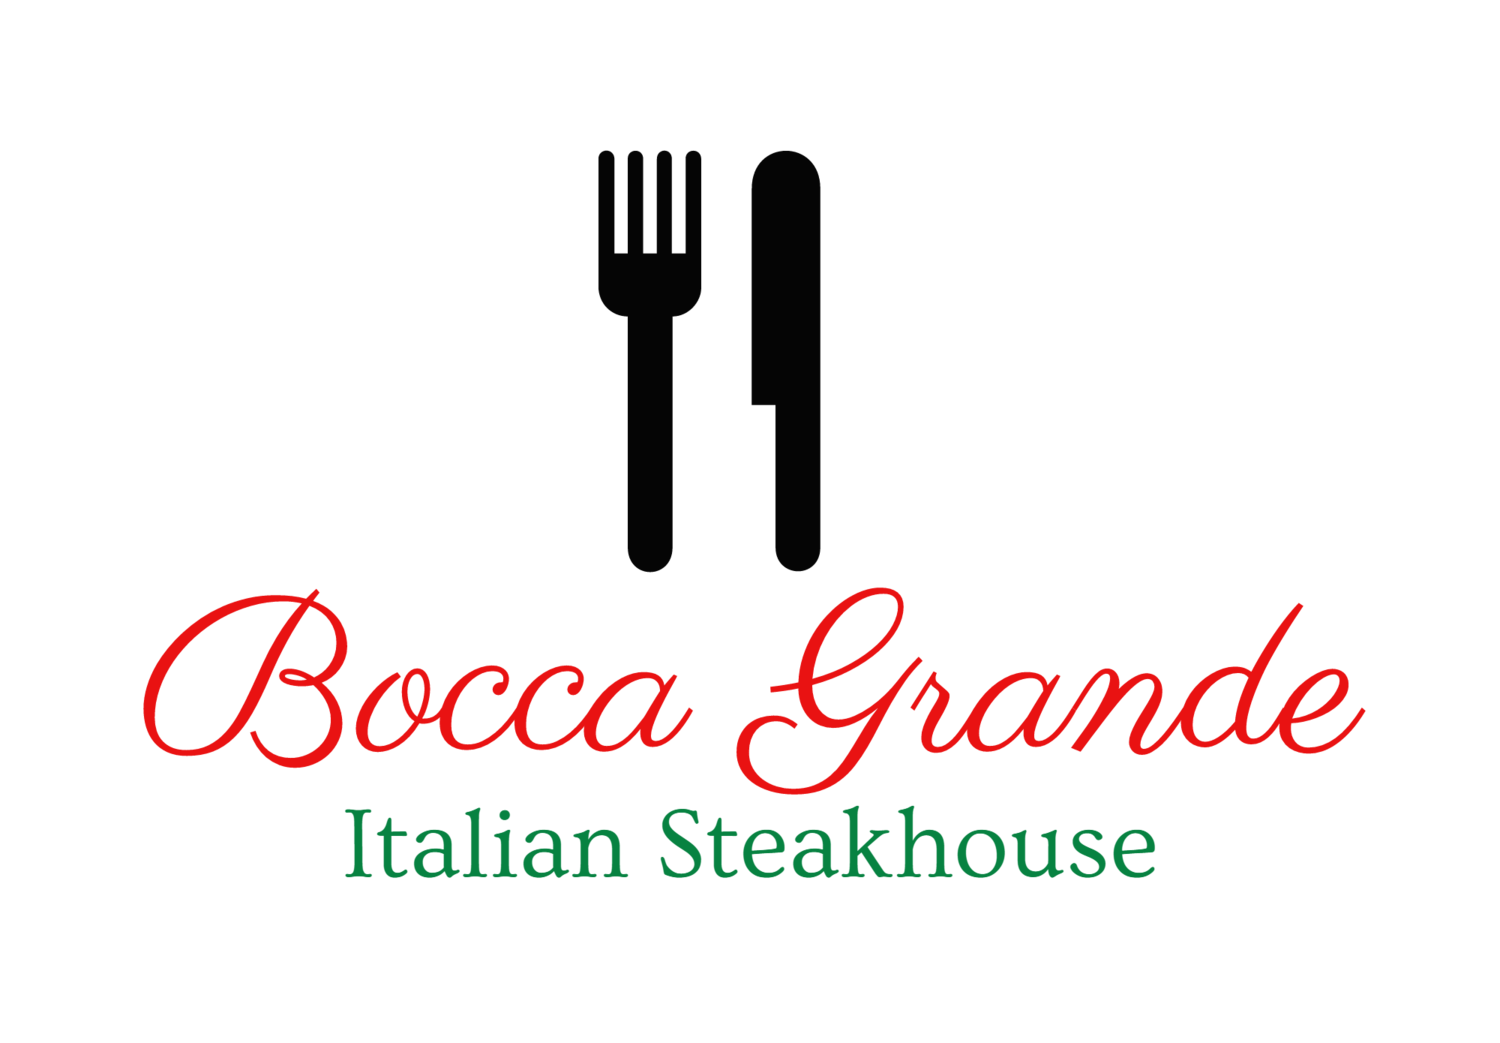 Bocca Grande Italian Steakhouse